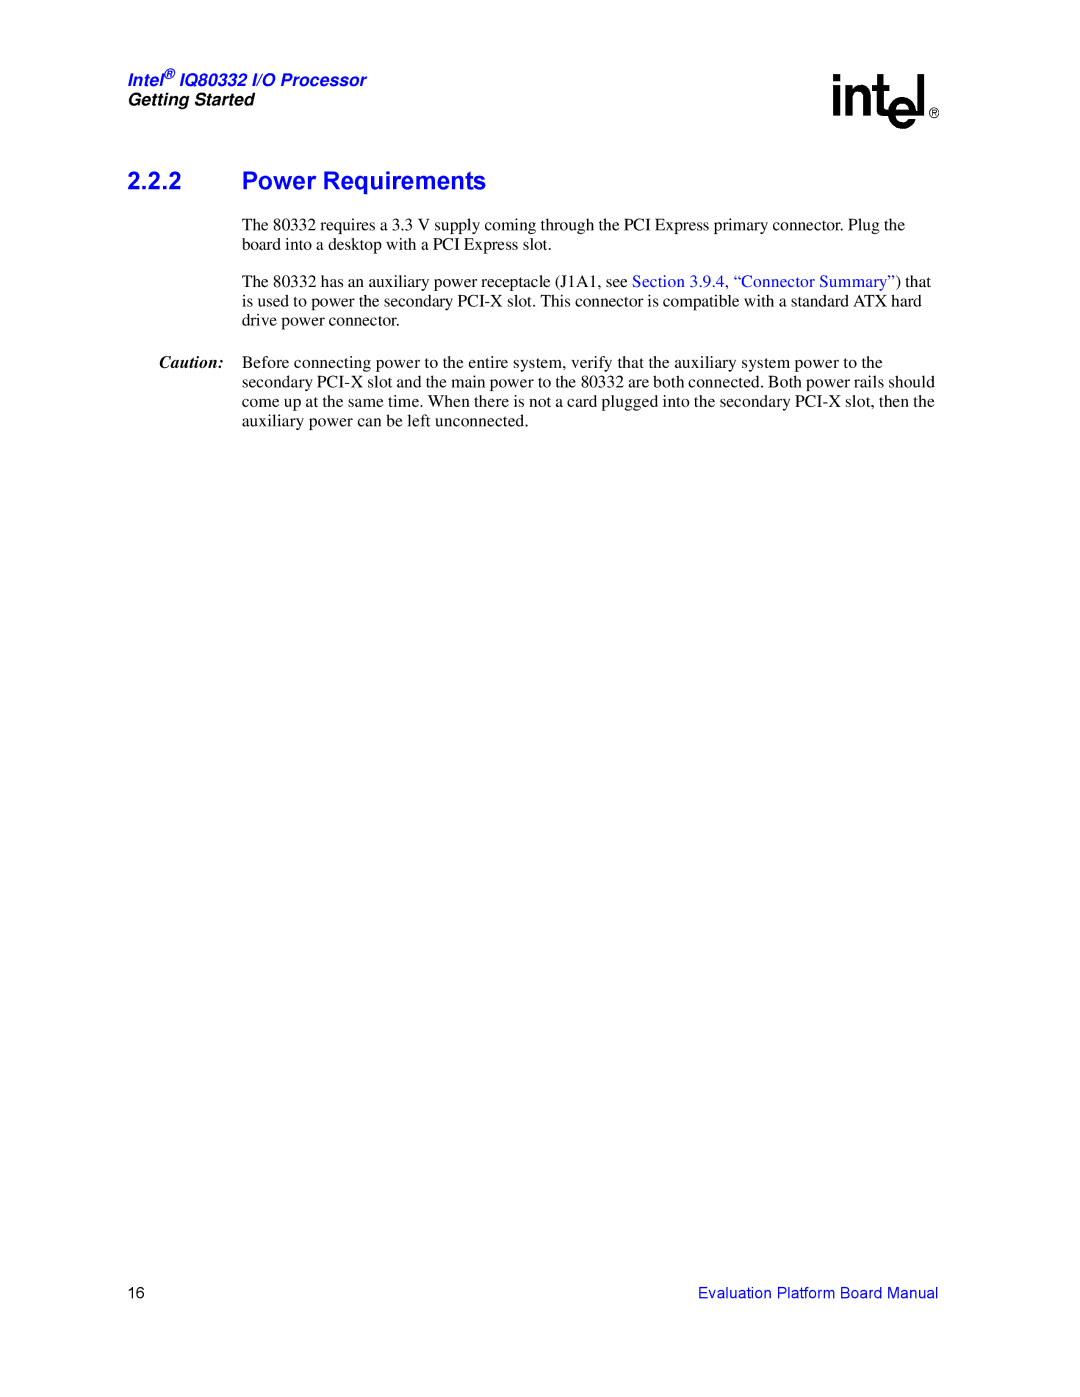 Intel IQ80332 manual Power Requirements 